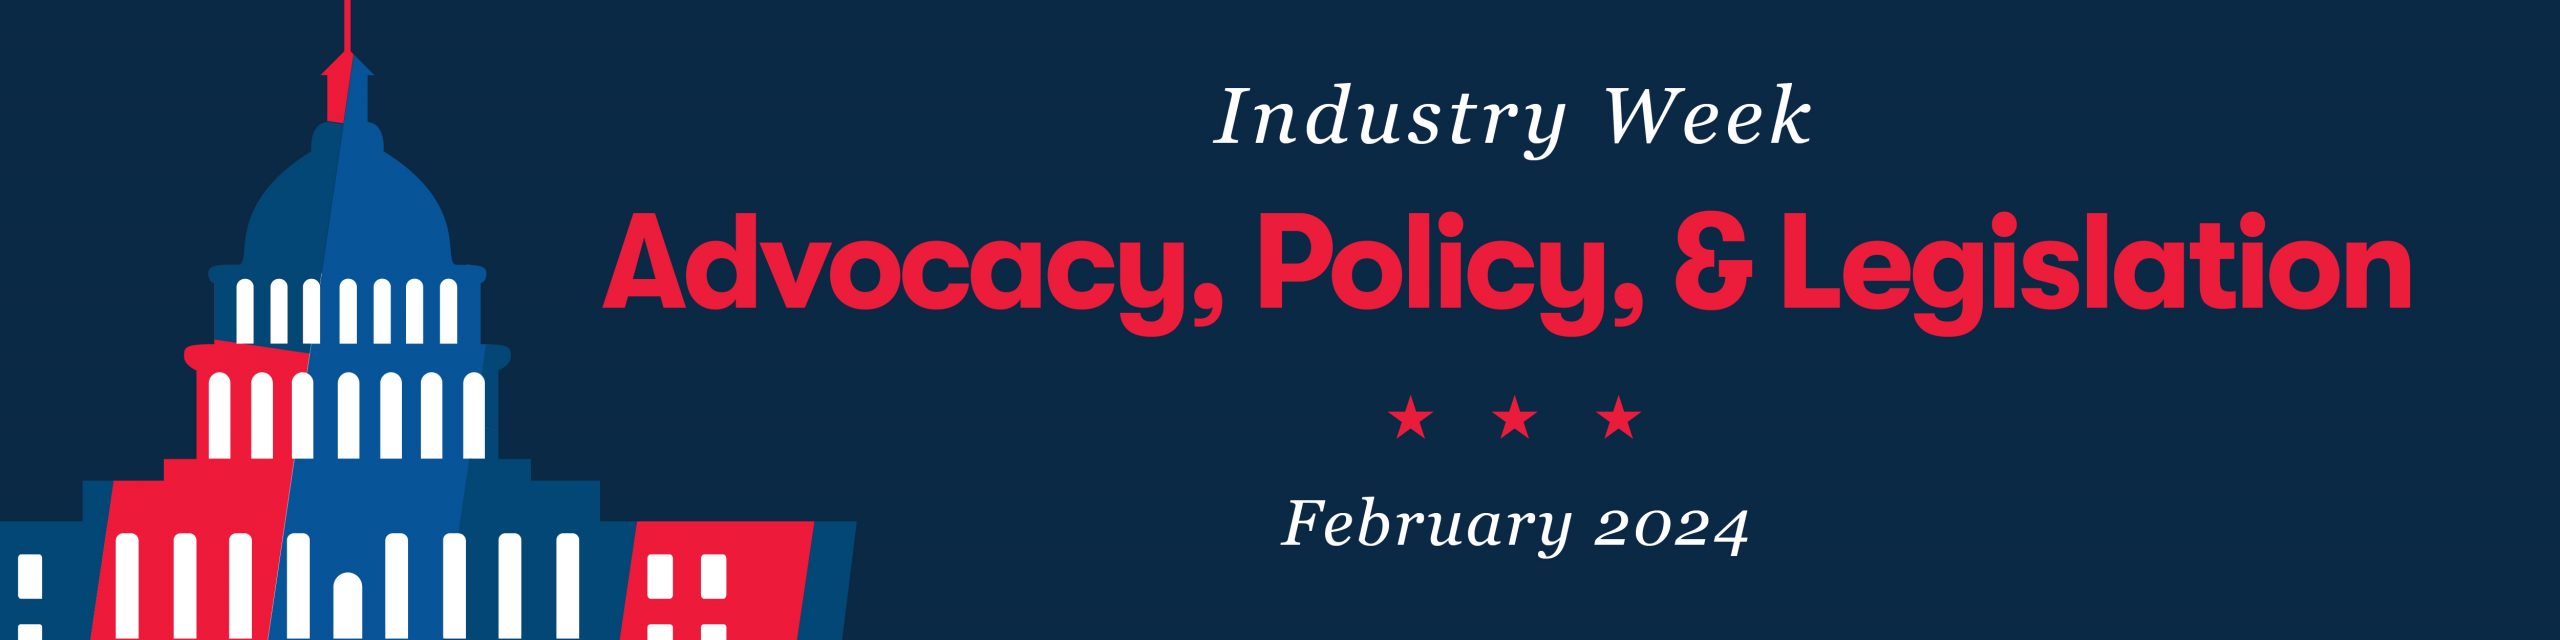 Advocacy, Policy, and Legislation AU event graphic.